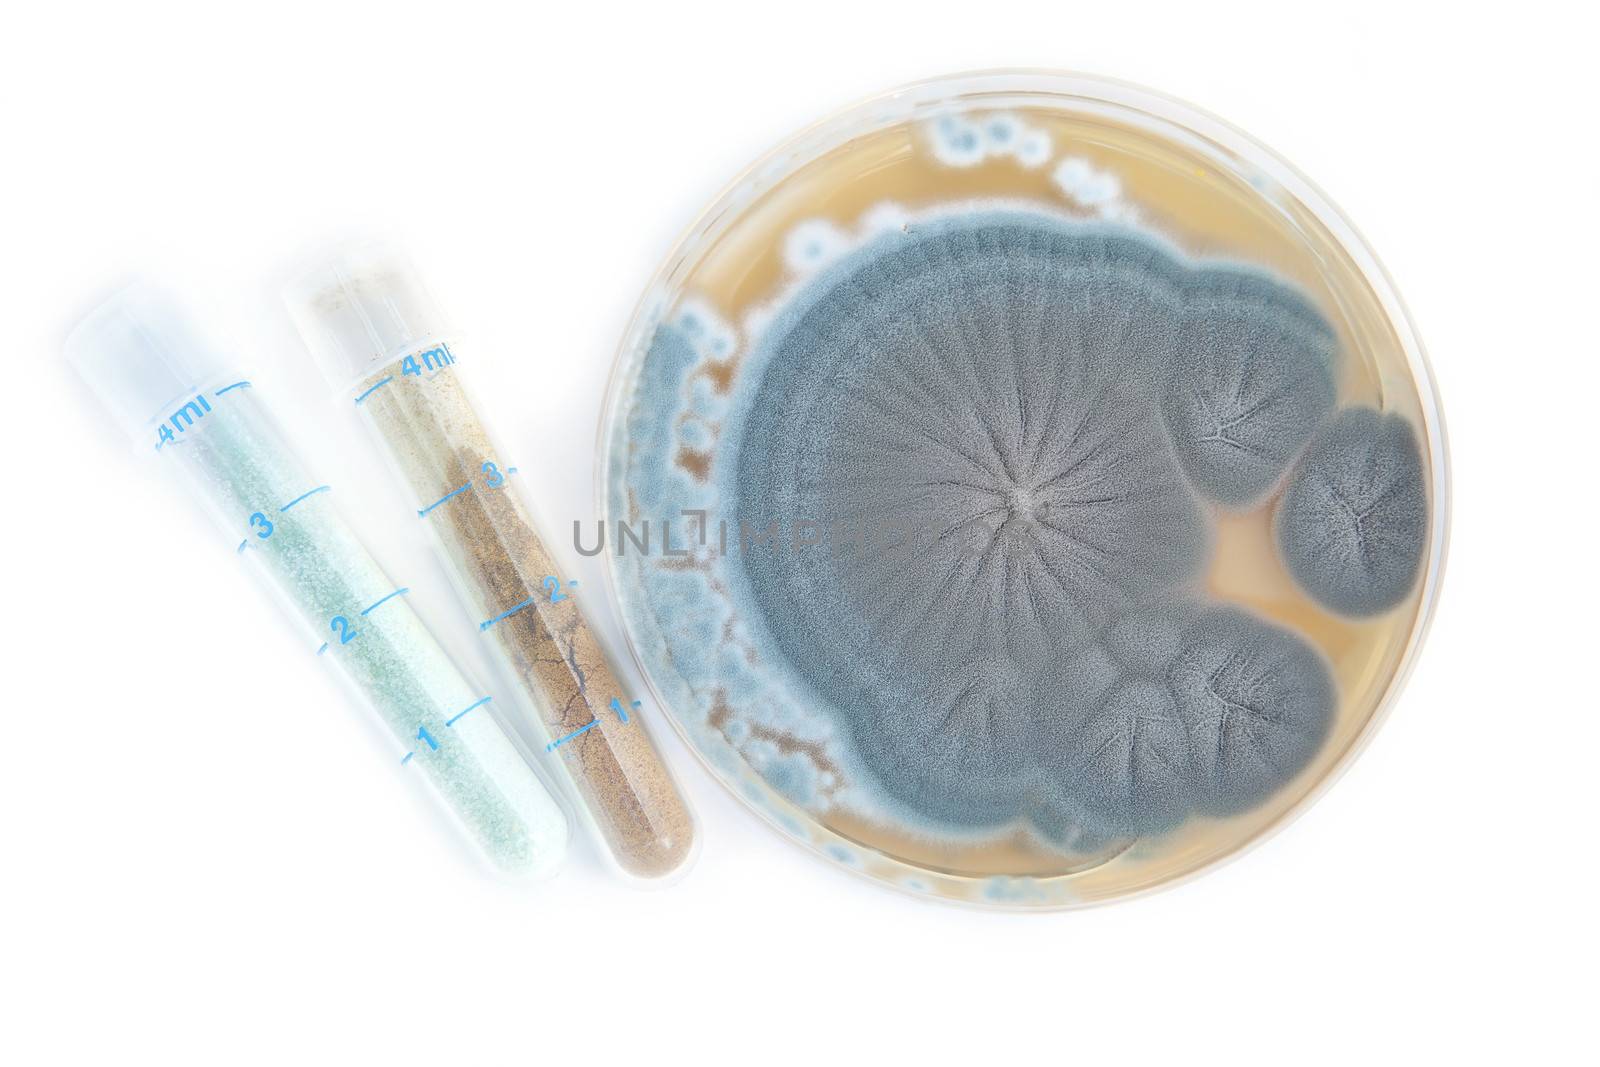 Penicillium fungi on agar plate and tubes with antibiotics on white